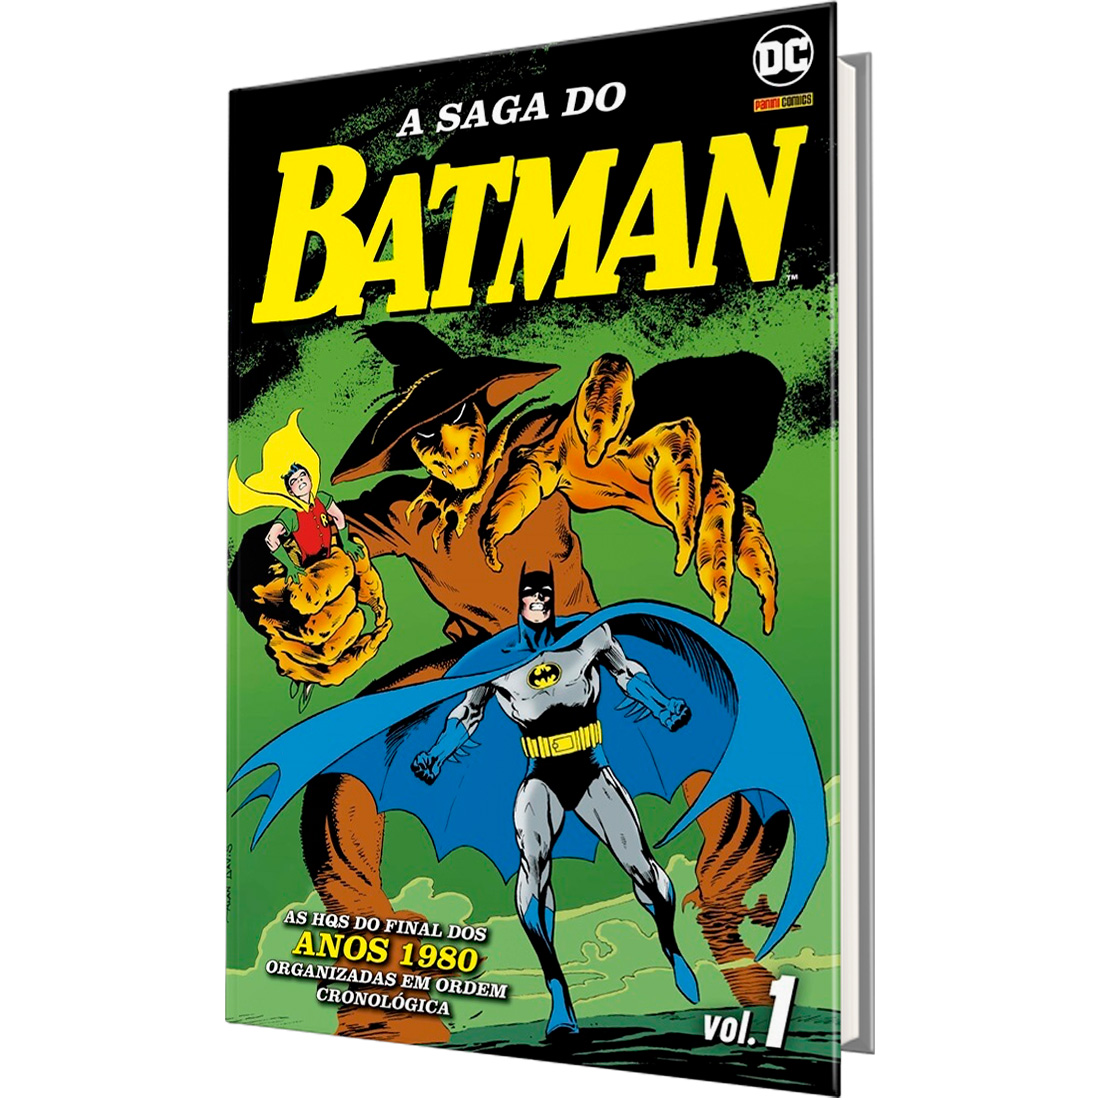 A Saga do Batman - Vol. 1